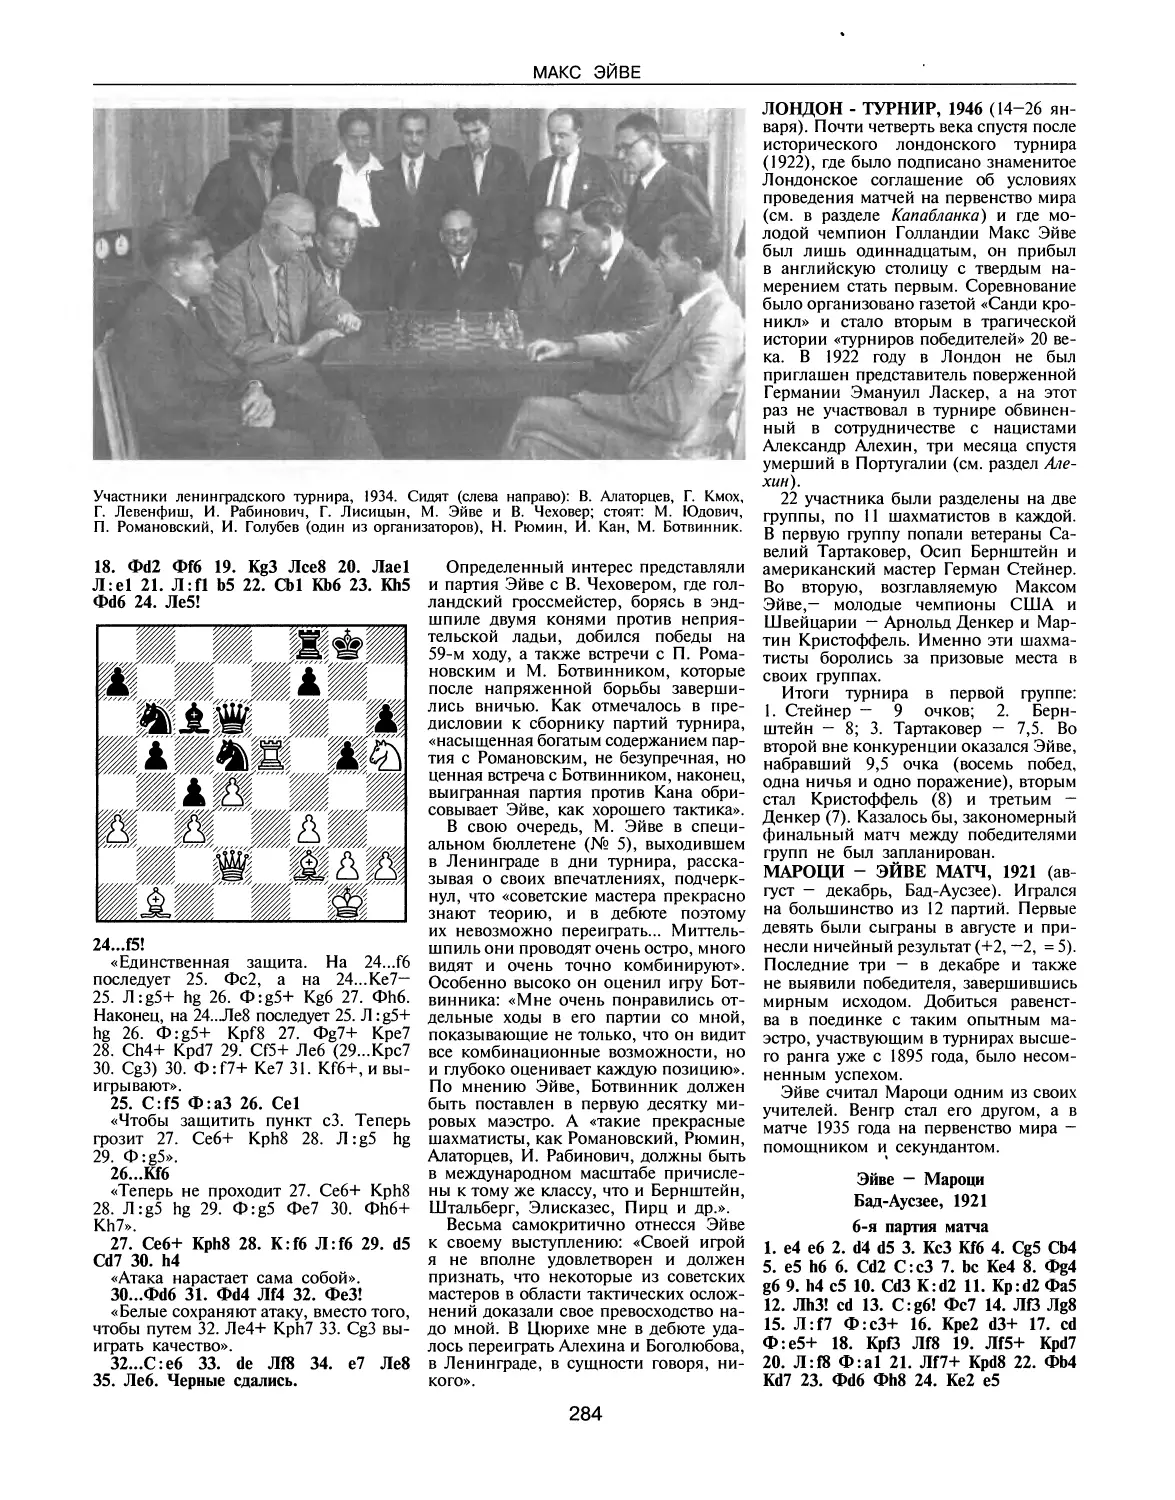 Лондон-турнир, 1946
Мароци — Эйве матч, 1921